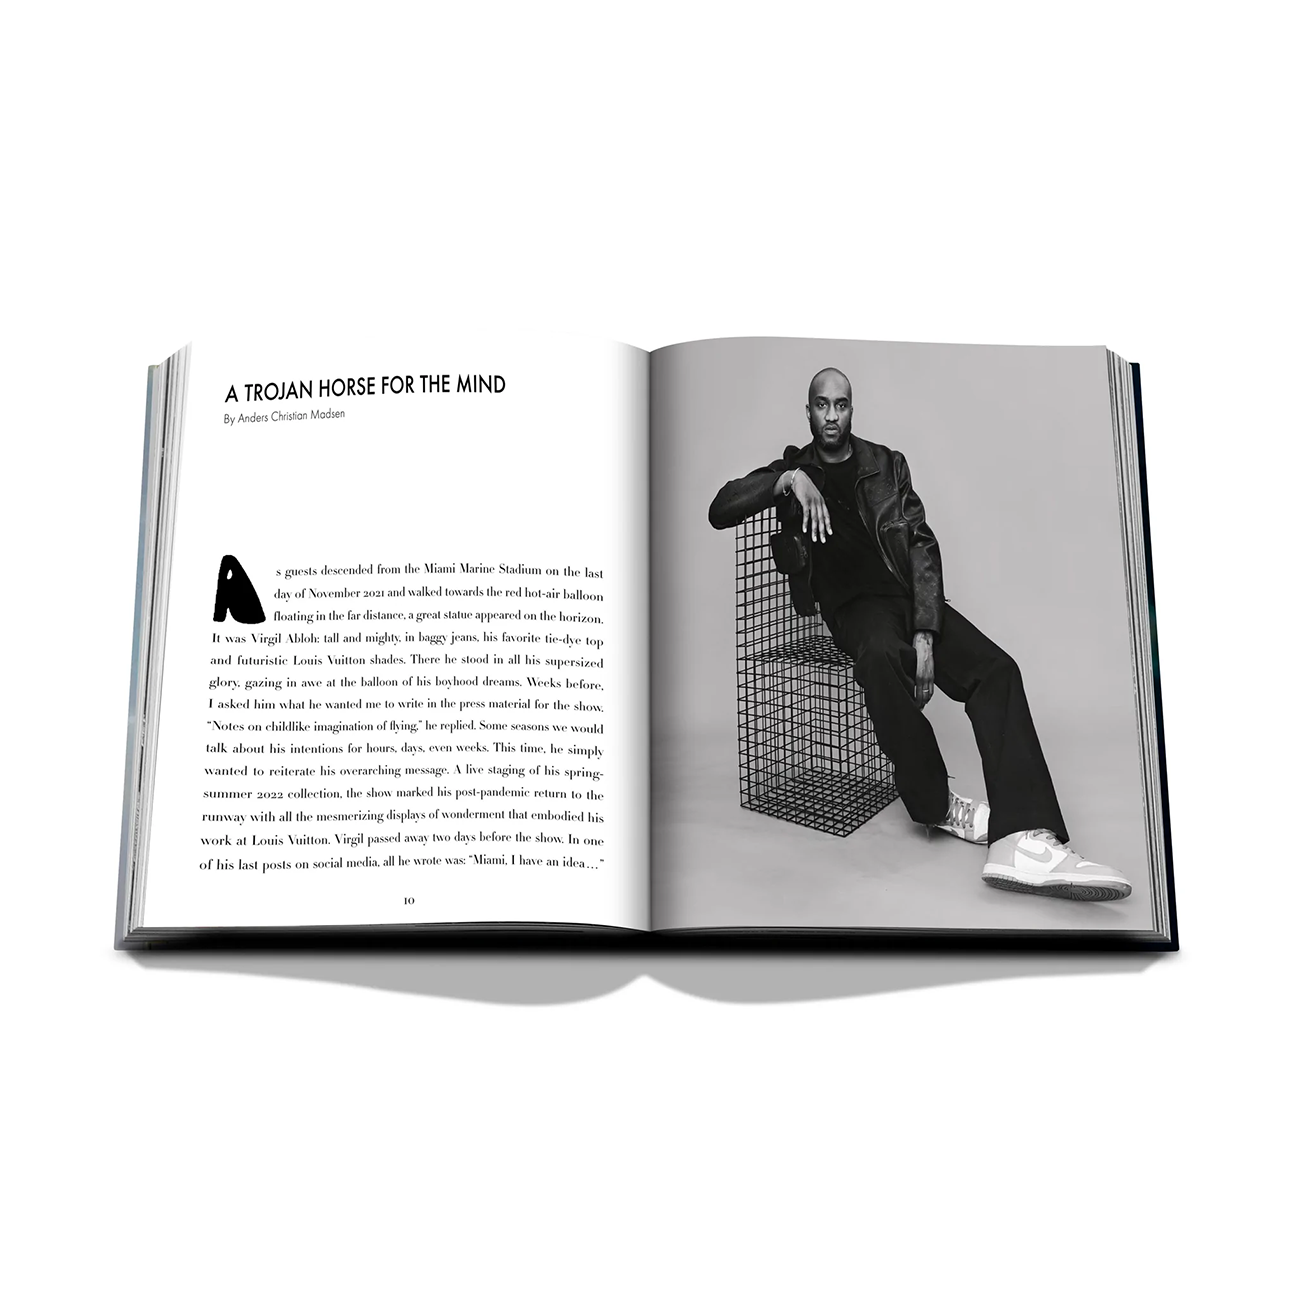 Assouline Louis Vuitton: Virgil Abloh (Classic Balloon Cover) Hardcover -  ASSOULINE